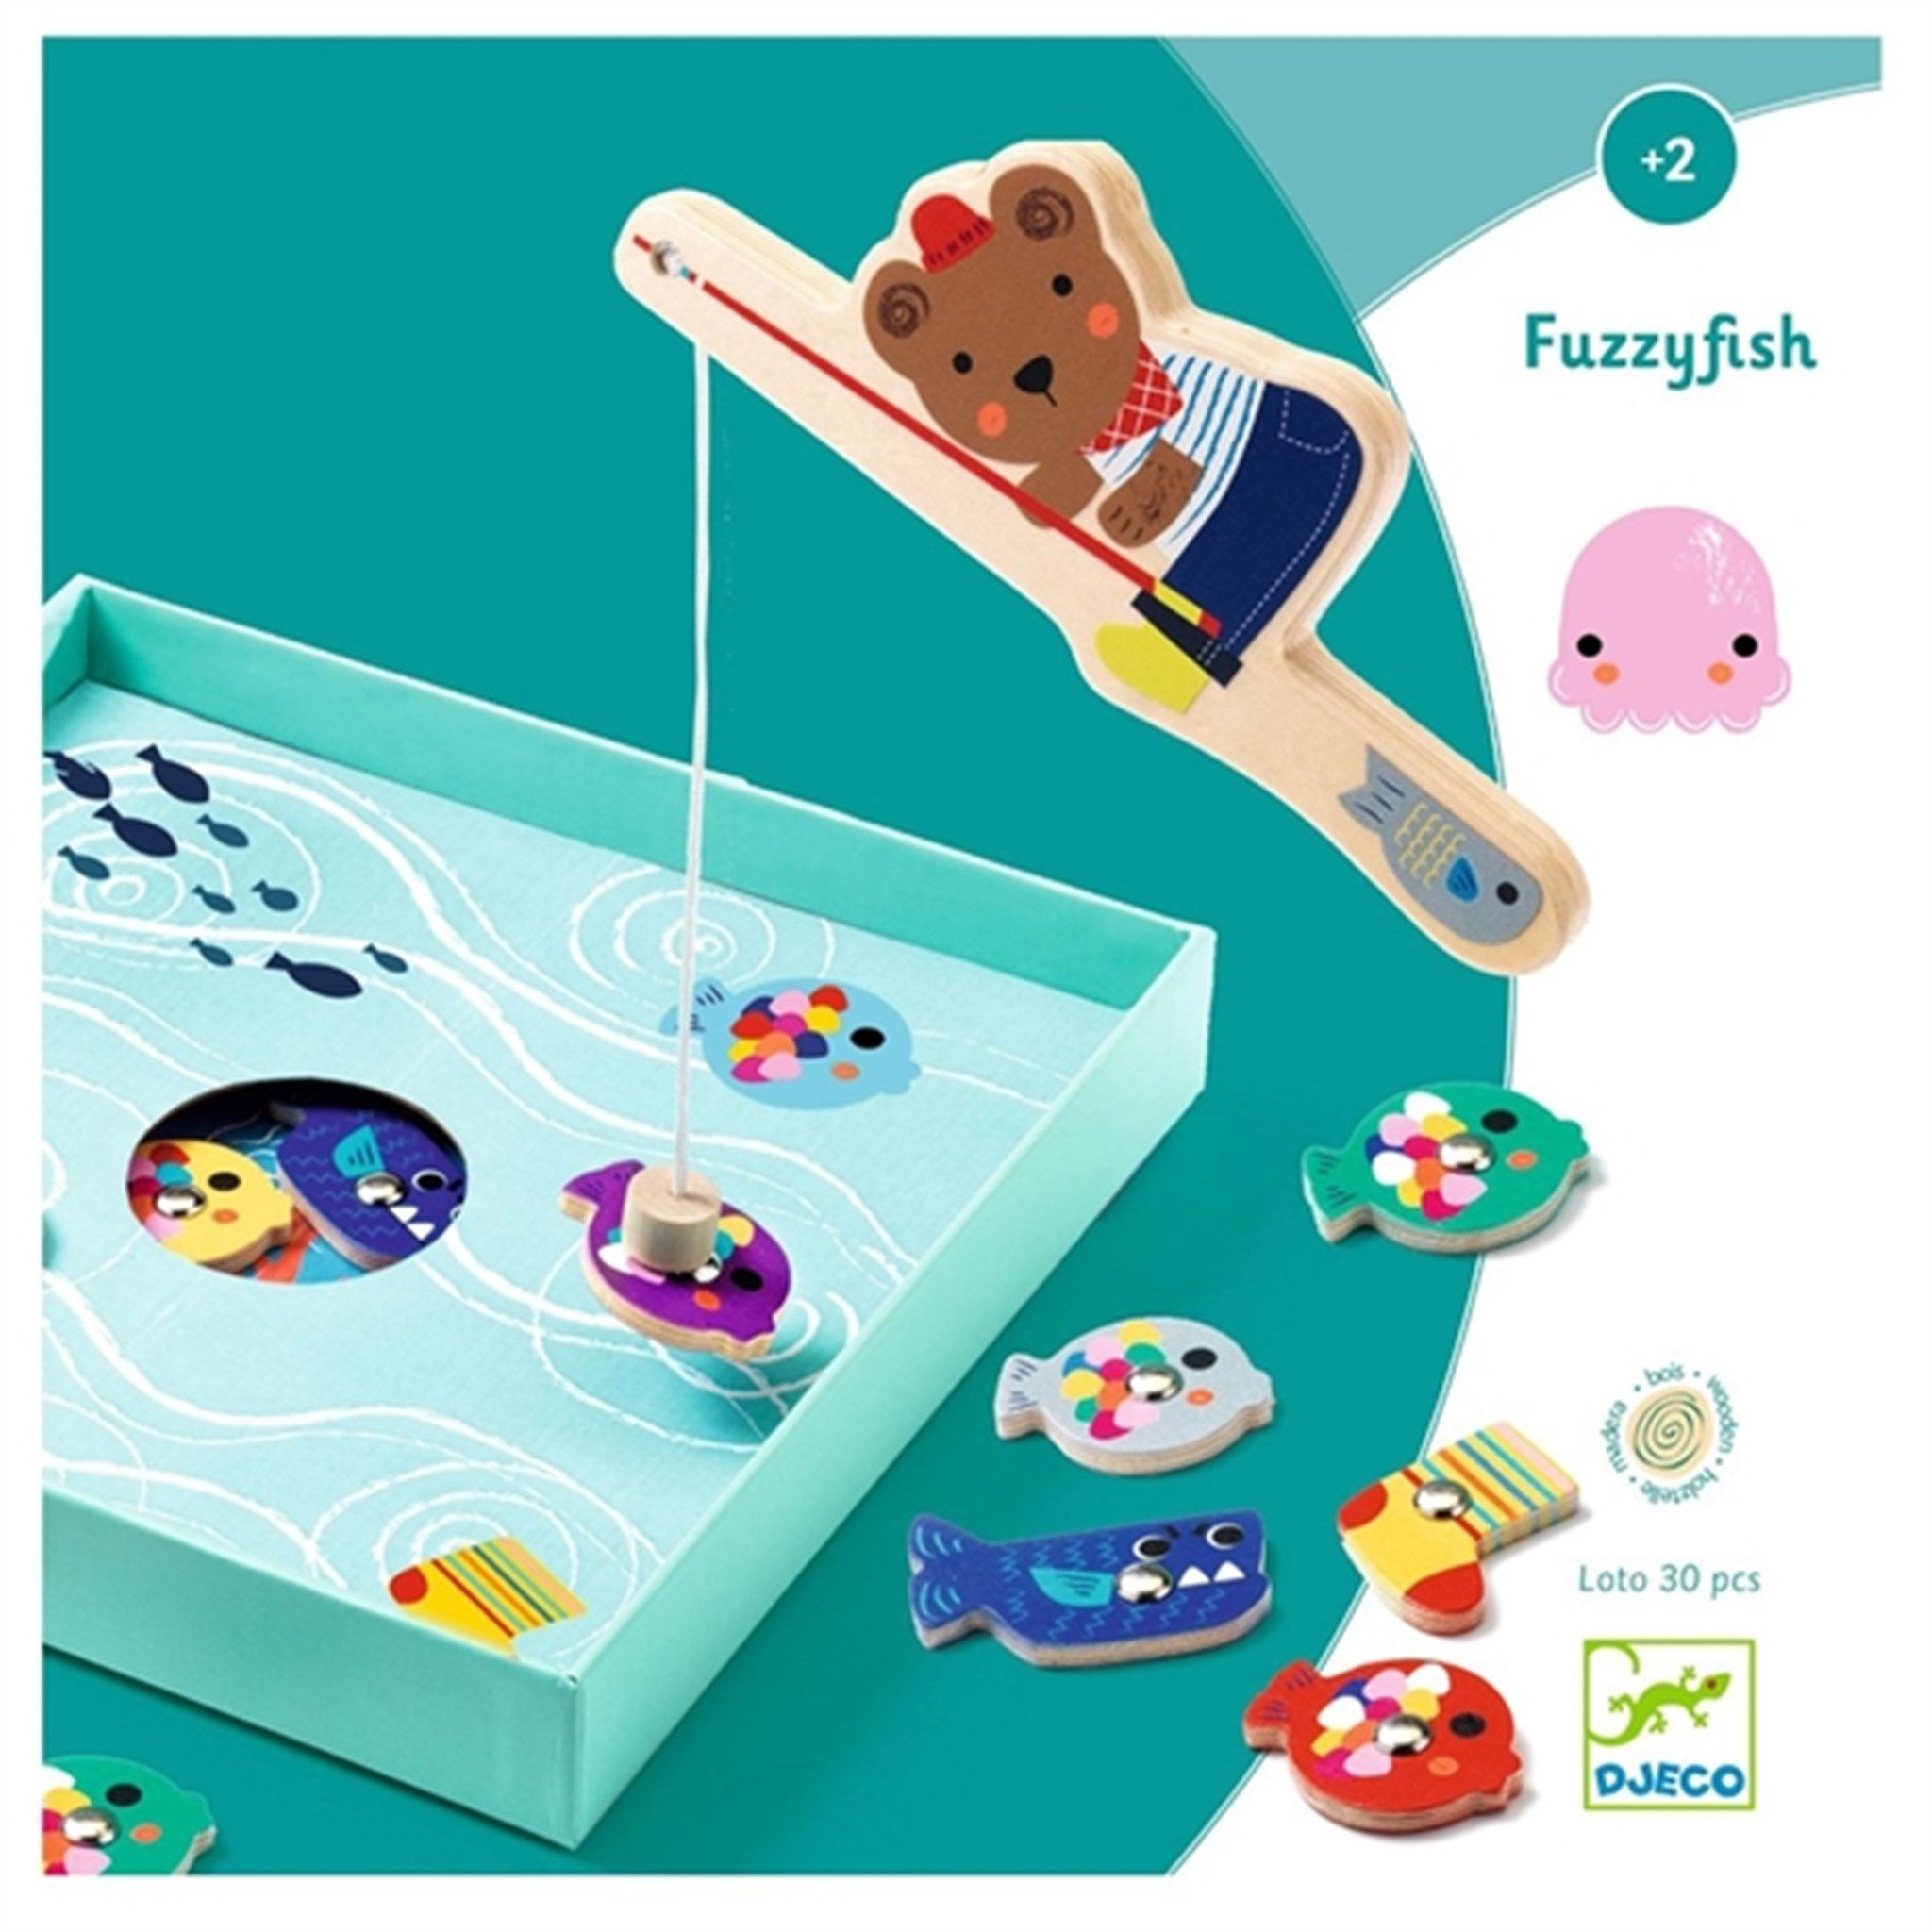 Djeco Fishing Game Fuzzyfish 2